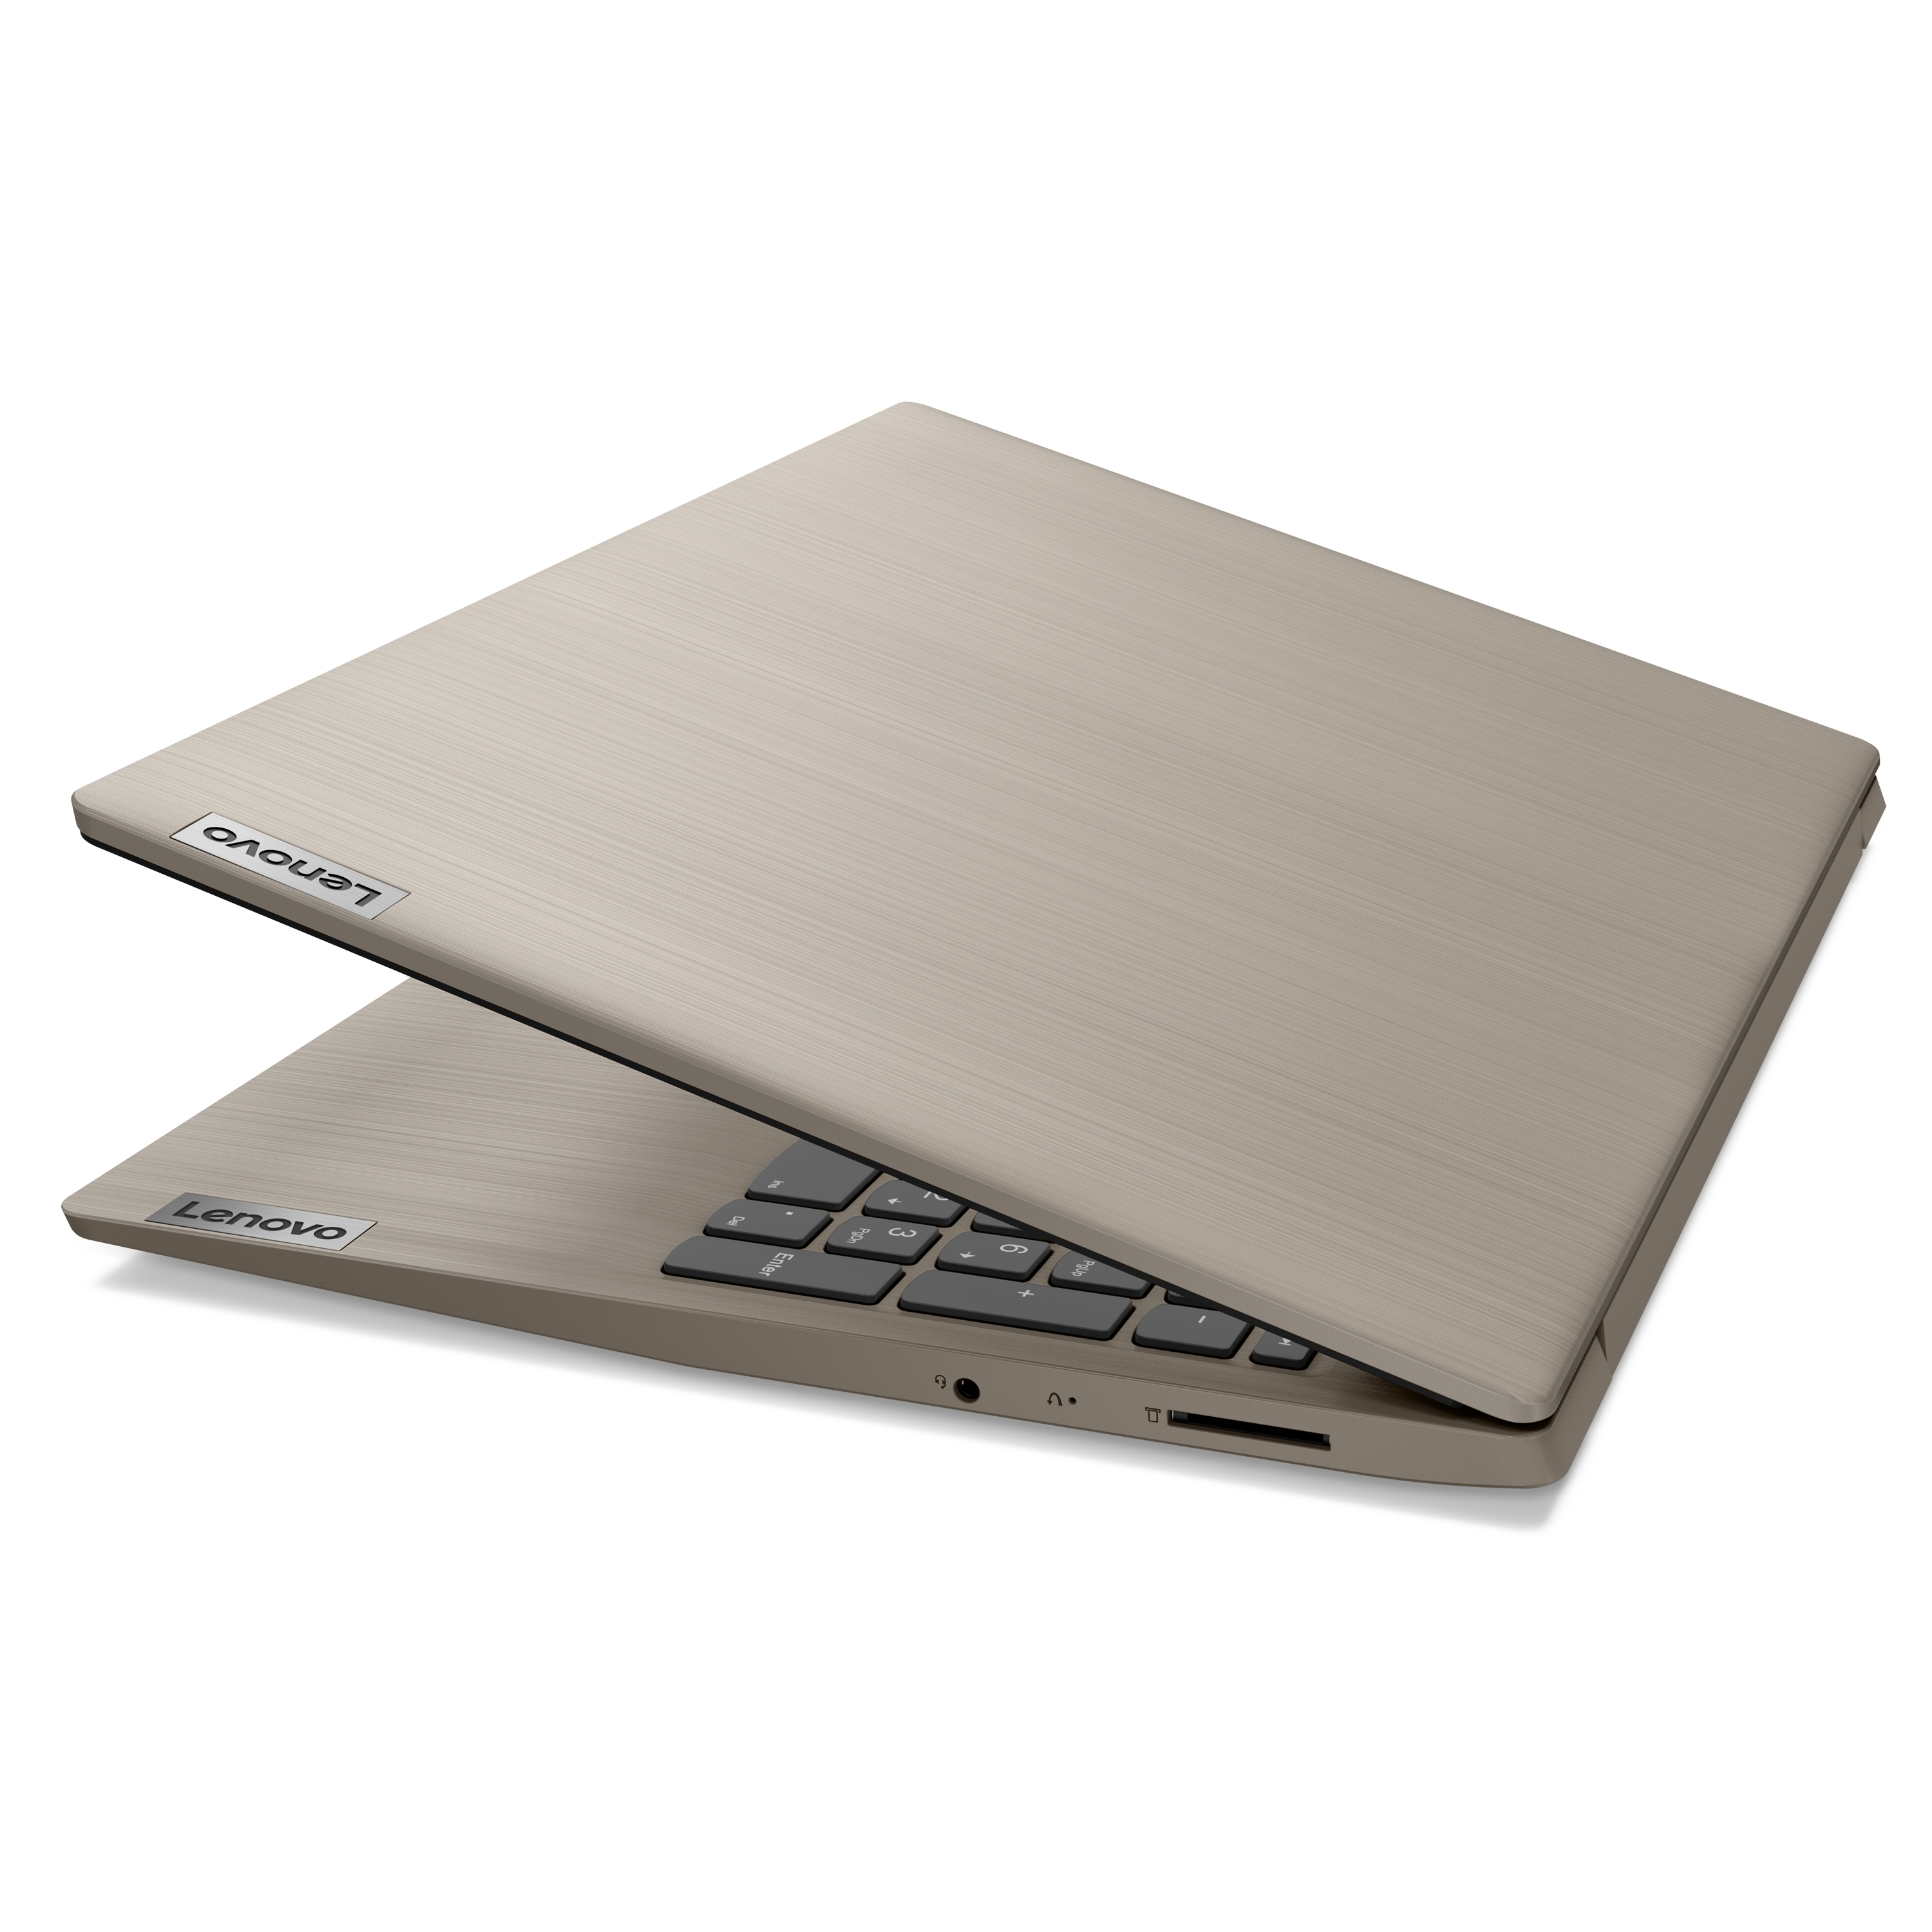 Lenovo IdeaPad 3 15" Laptop, Intel Core i5-1035G1 Quad-Core Processor, 8GB Memory, 256GB Solid State Drive, Windows 10, Almond, 81WE00EPUS (Google Classroom Compatible) - image 8 of 16